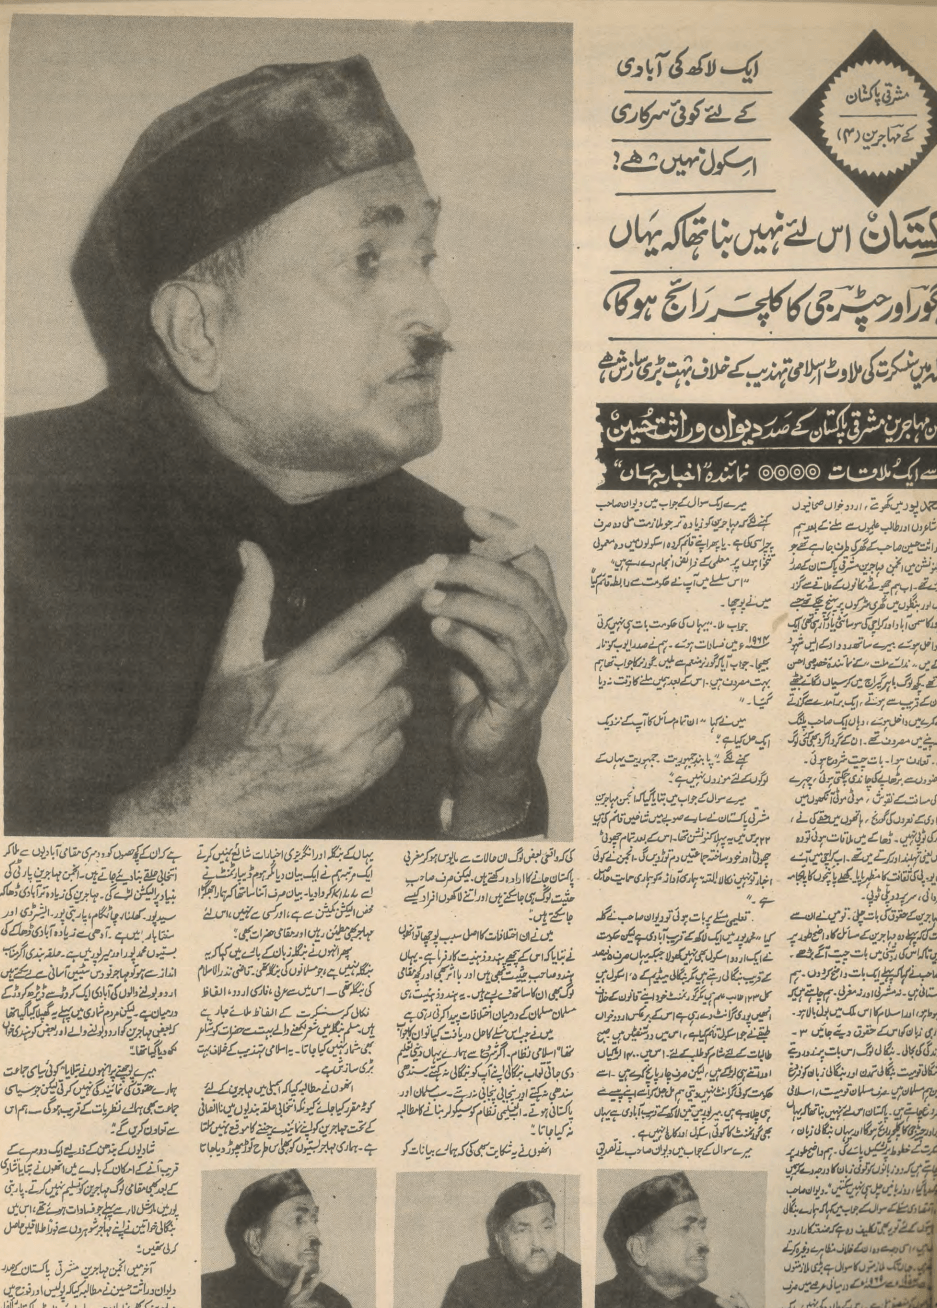 Akhbar-e-Jahan (Jan 14, 1970) - KHAJISTAN™